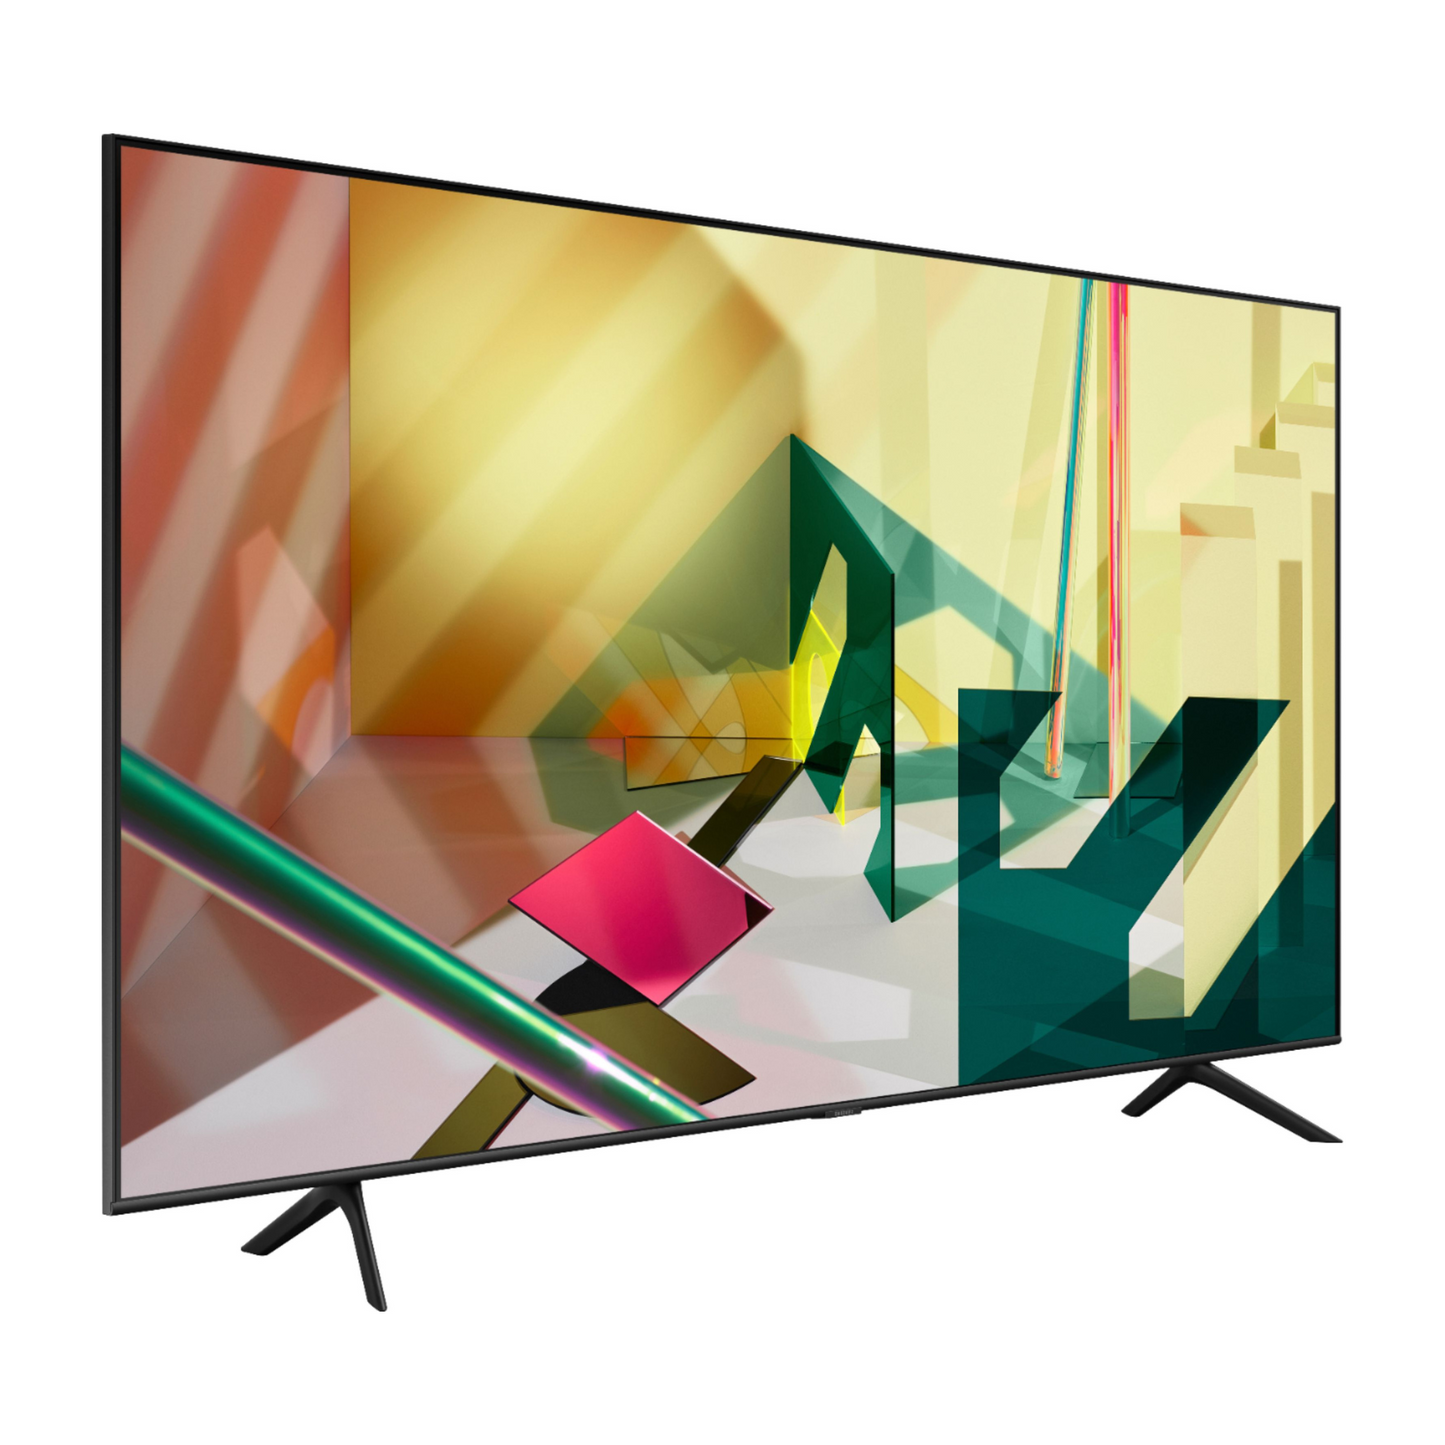 Samsung 50 inch Smart QLED TV - 4K, 50Q60T